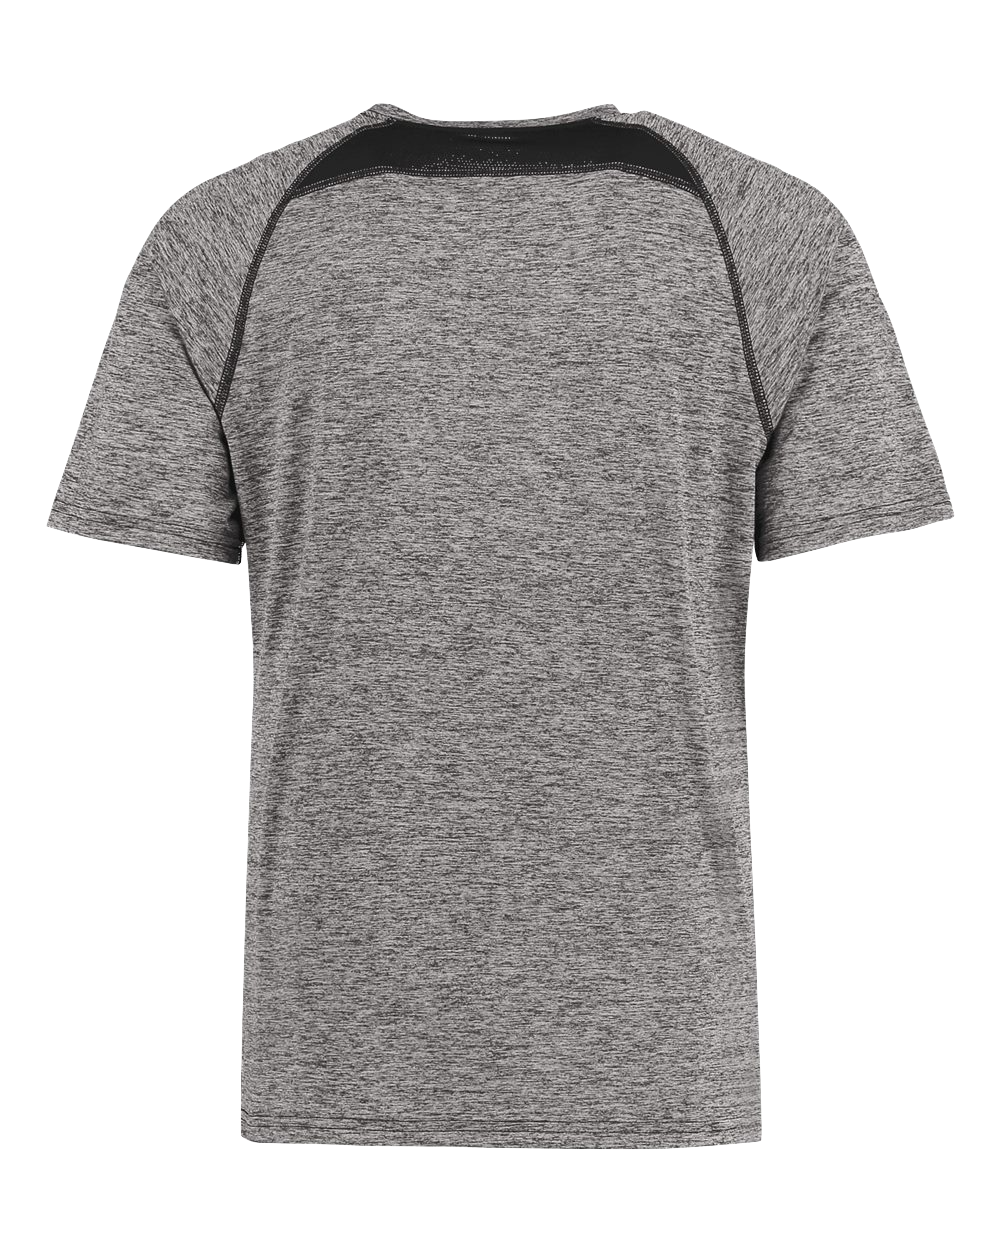 HIKING BOOT MOUNTAIN SCENE Poly/Elastane High Performance T-Shirt with UPF 50+